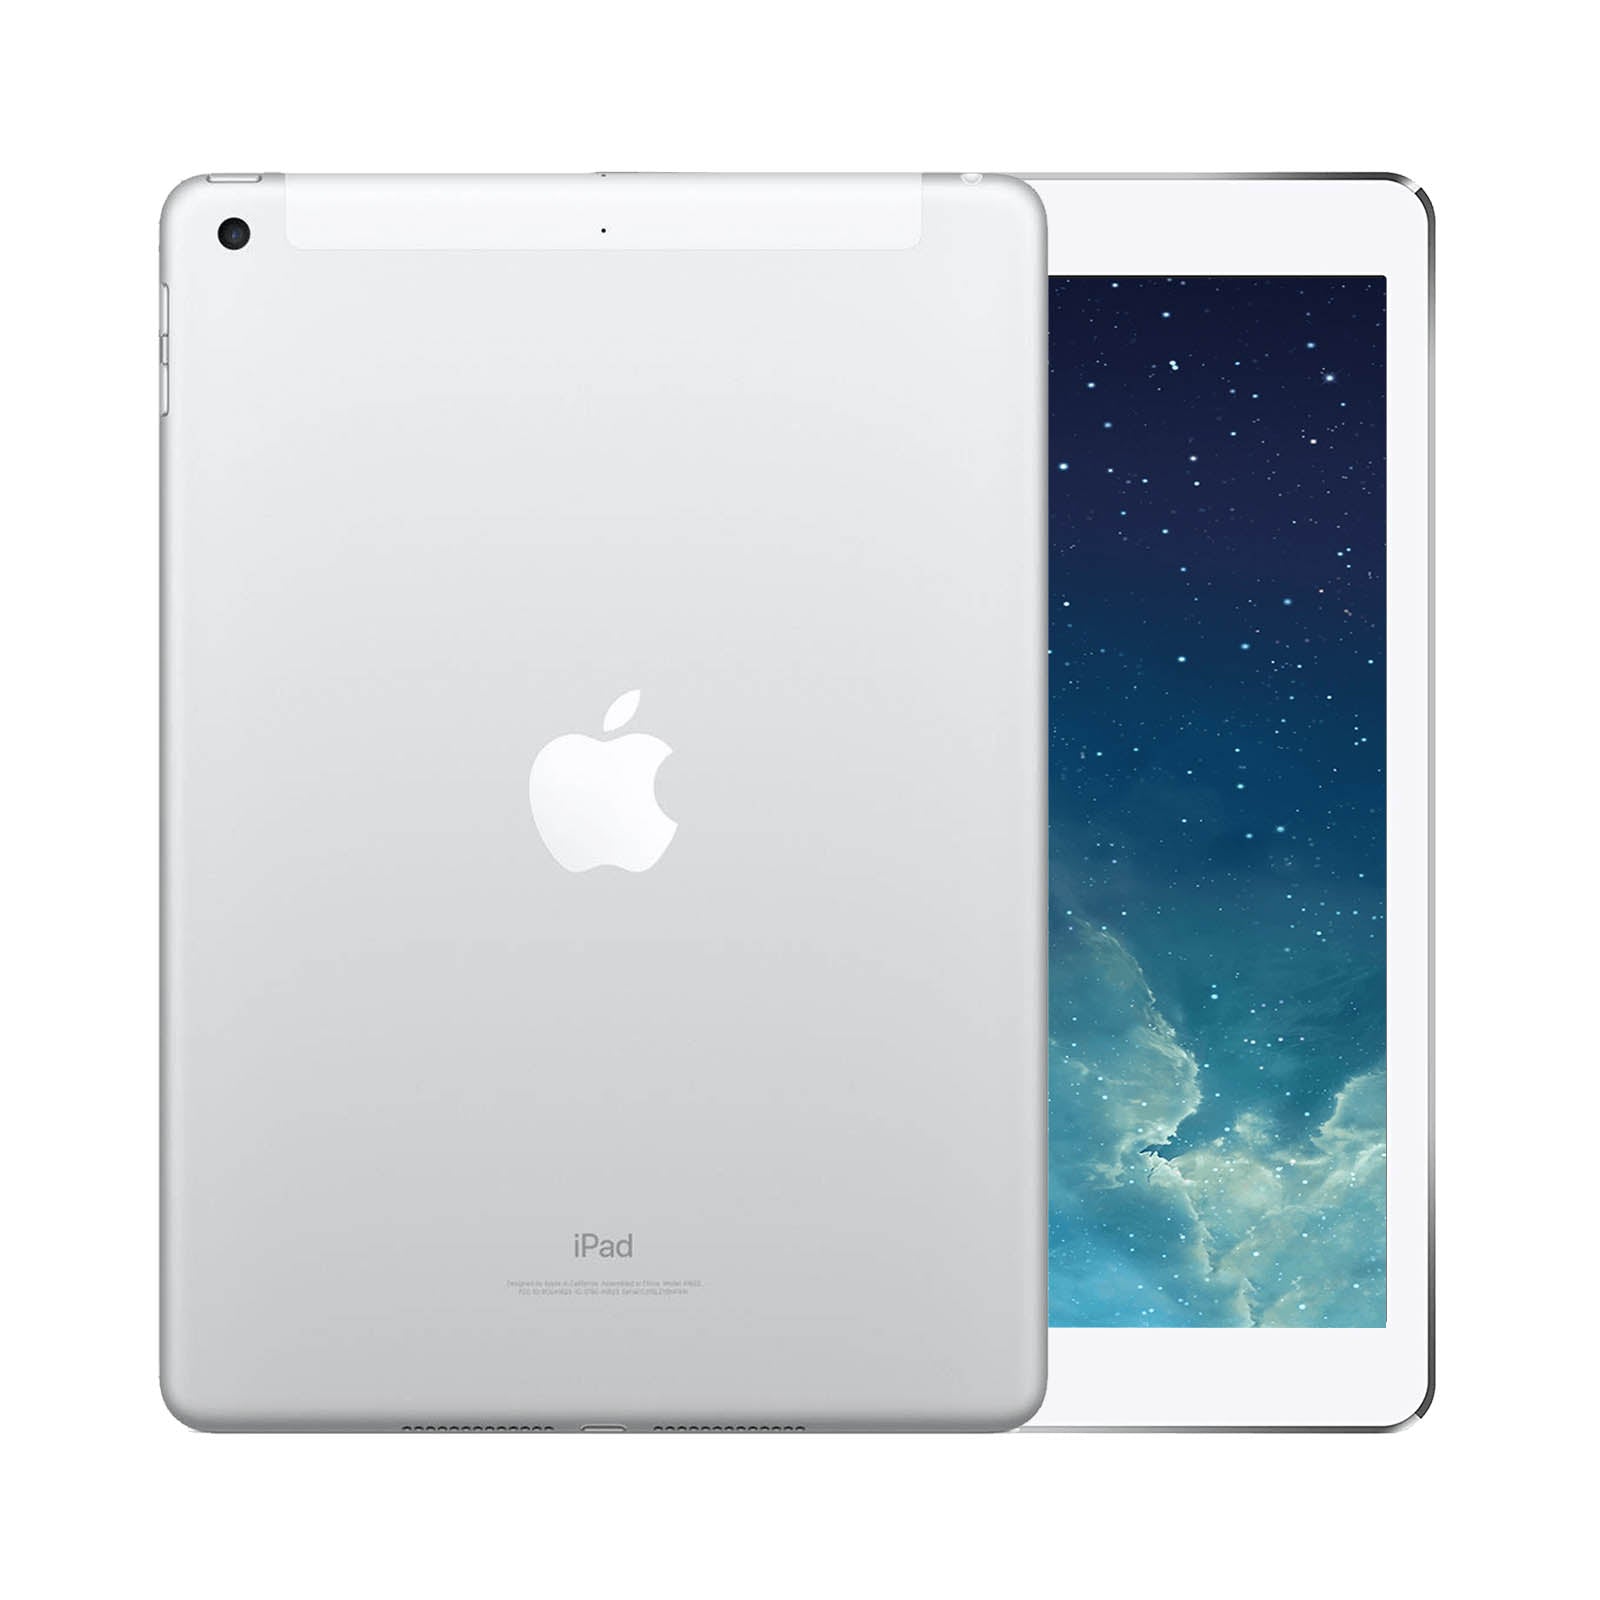 Apple iPad Air 128GB Silver Pristine - Unlocked